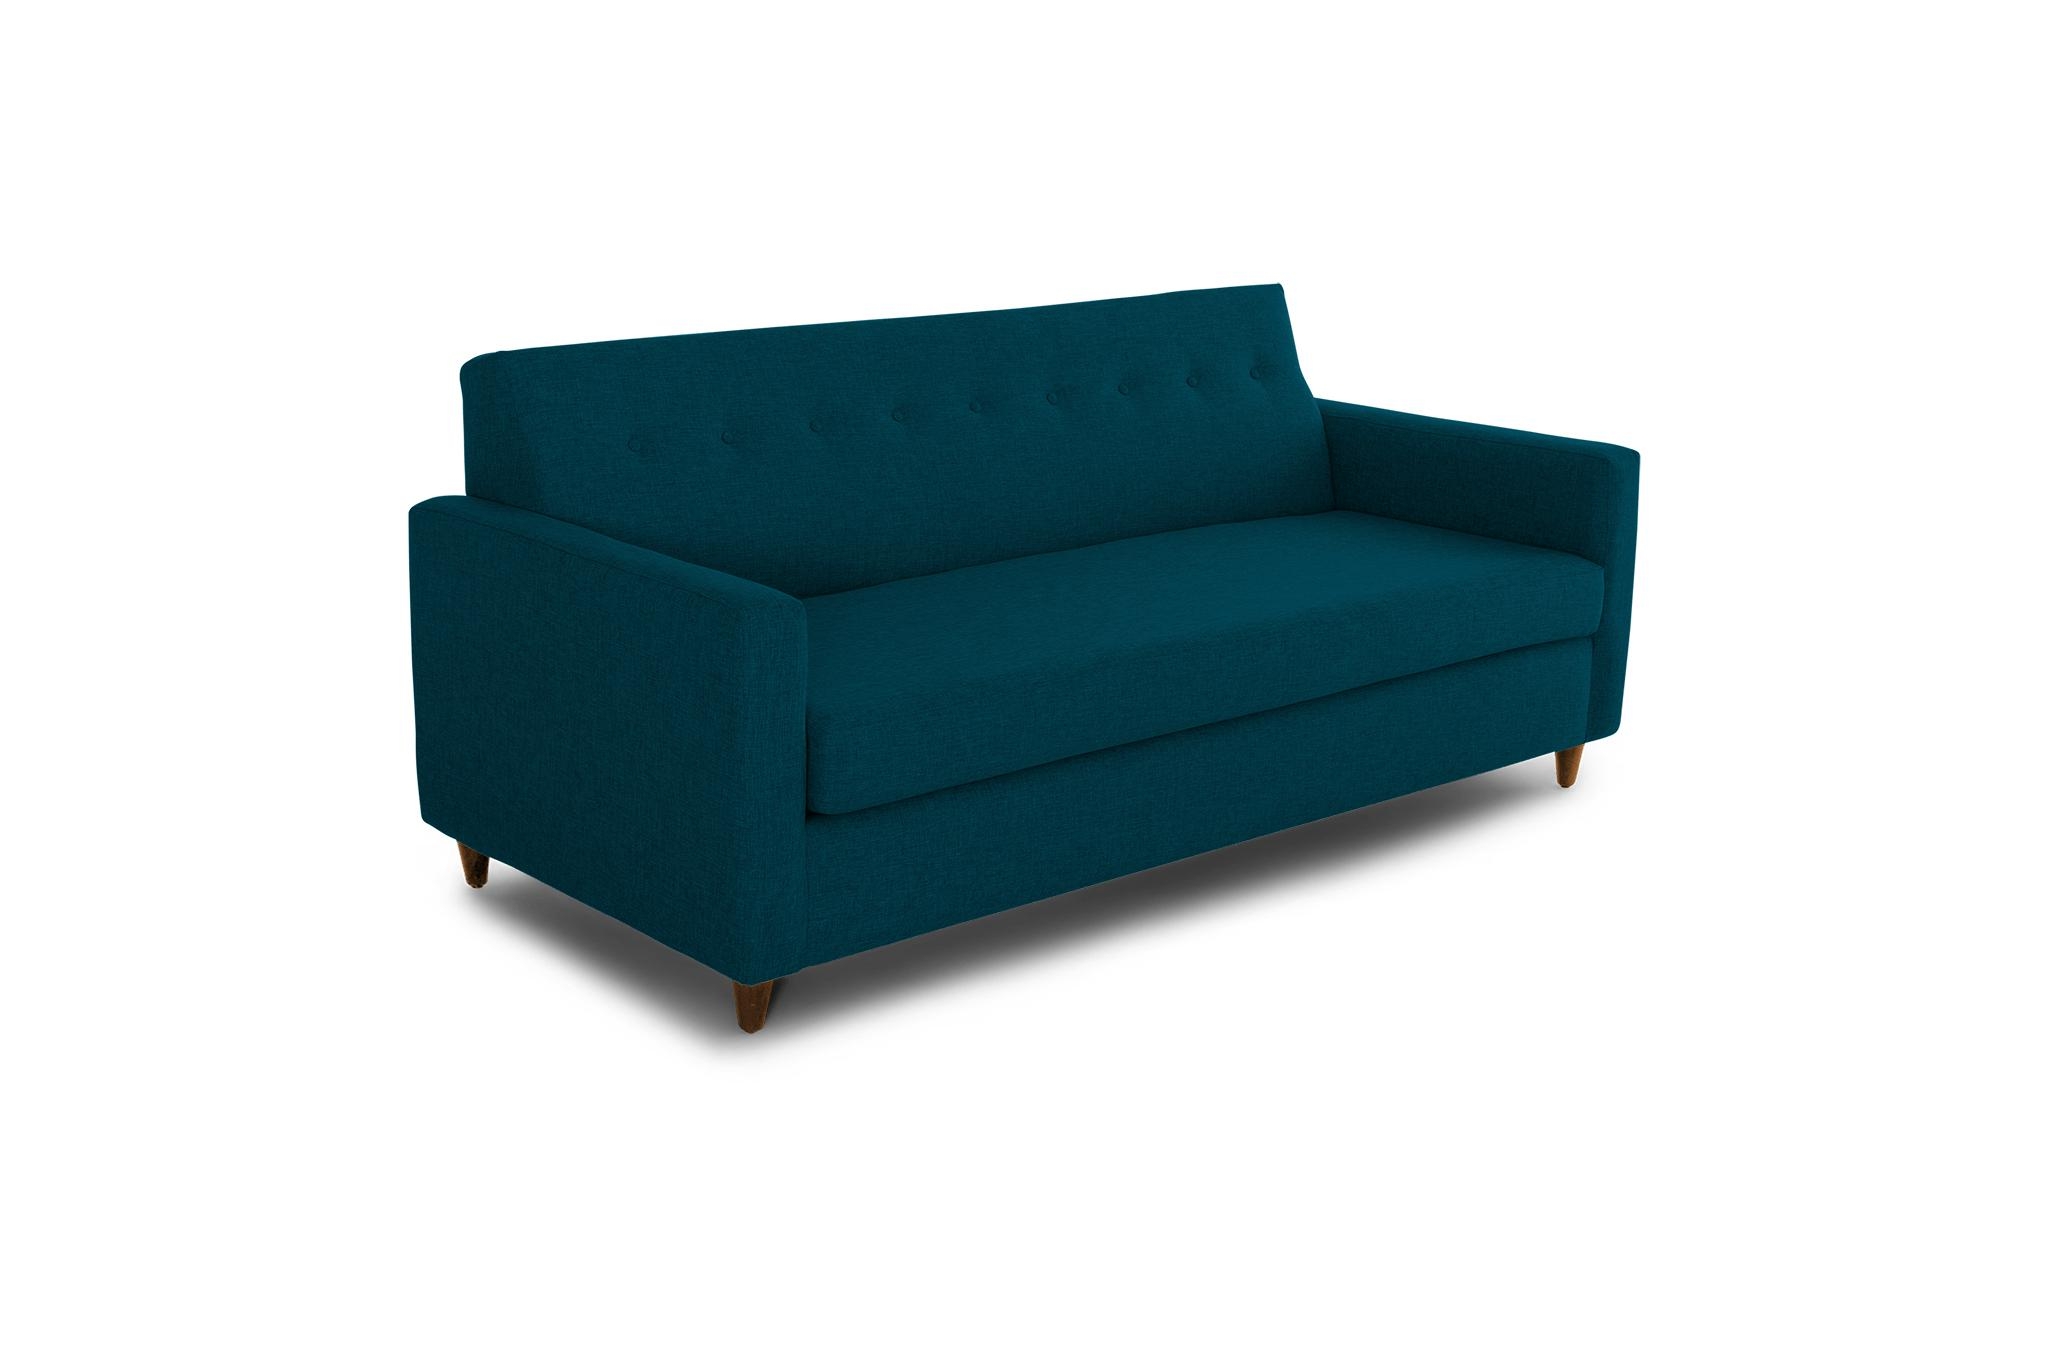 Blue Korver Mid Century Modern Sleeper Sofa - Key Largo Zenith Teal - Mocha - Image 2